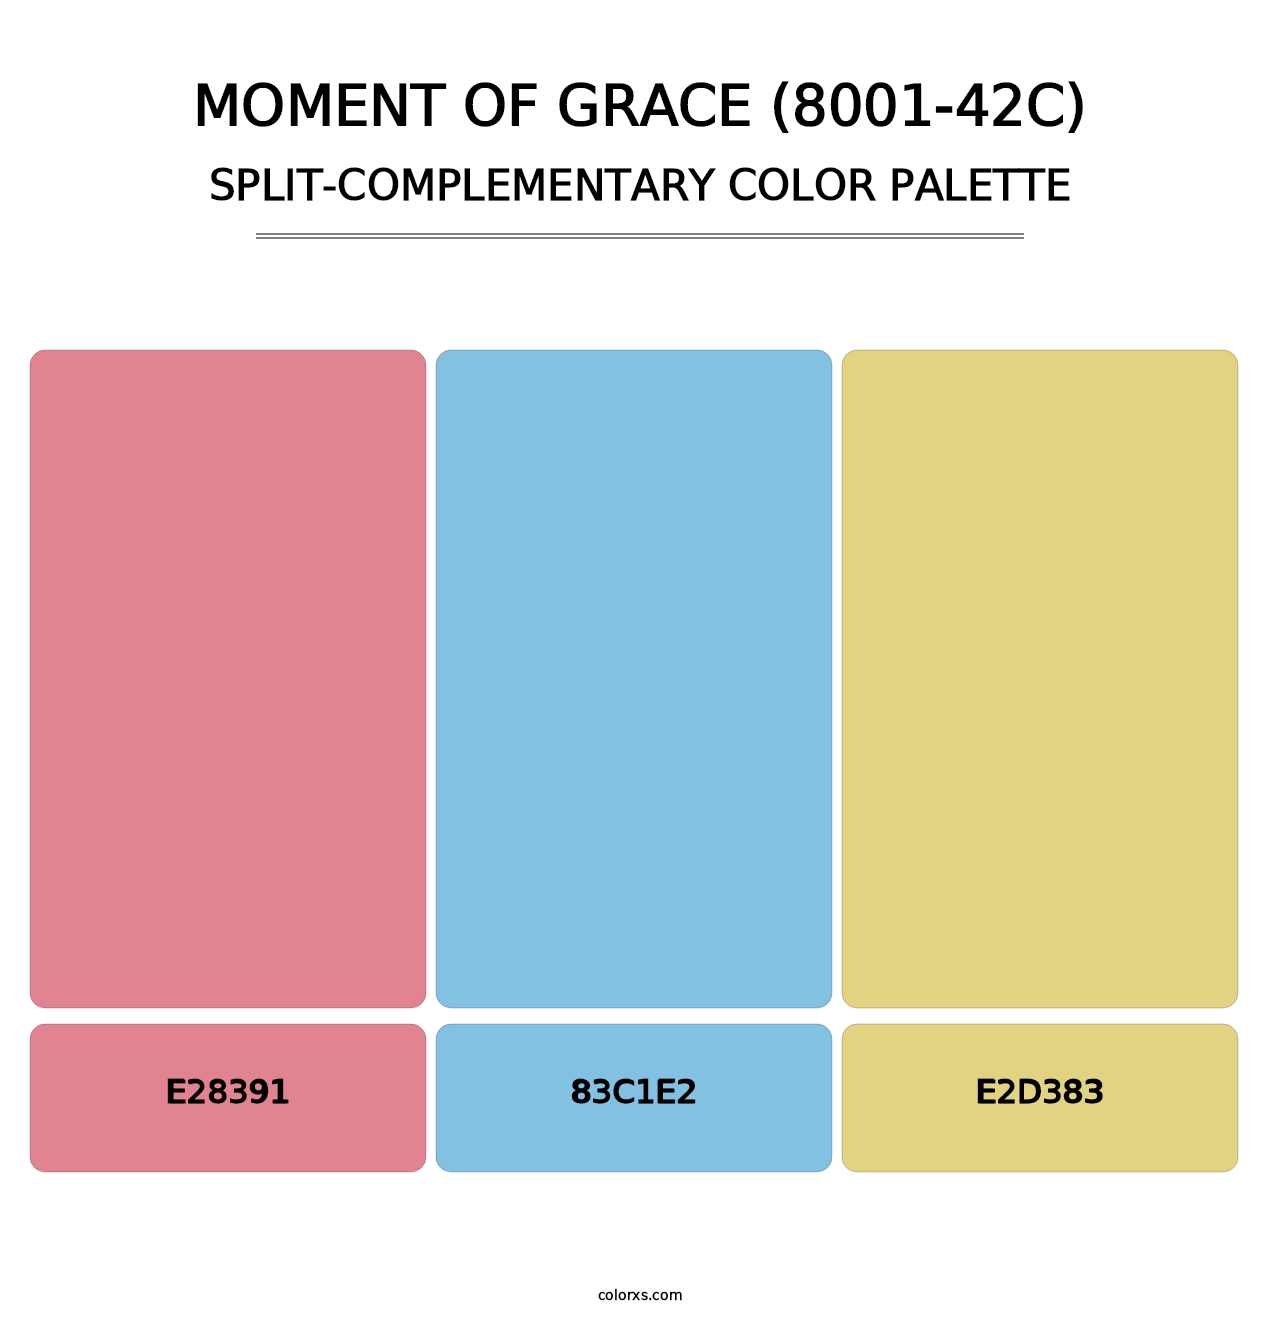 Moment of Grace (8001-42C) - Split-Complementary Color Palette